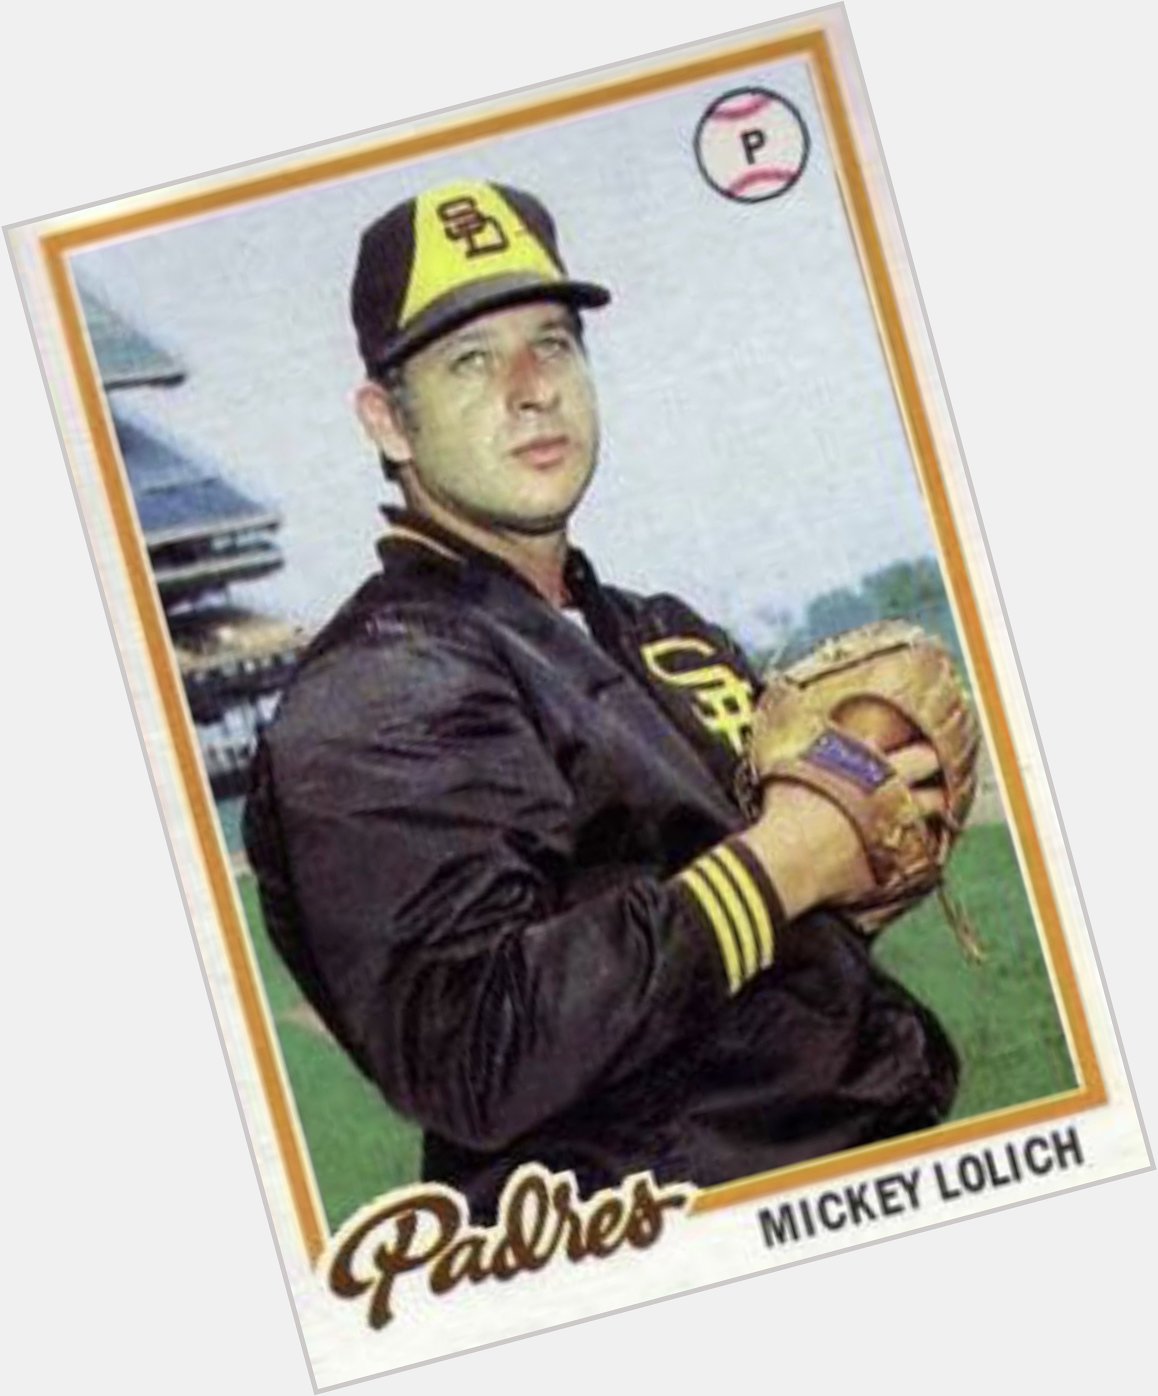 A Happy Birthday to former Pitcher Mickey Lolich 